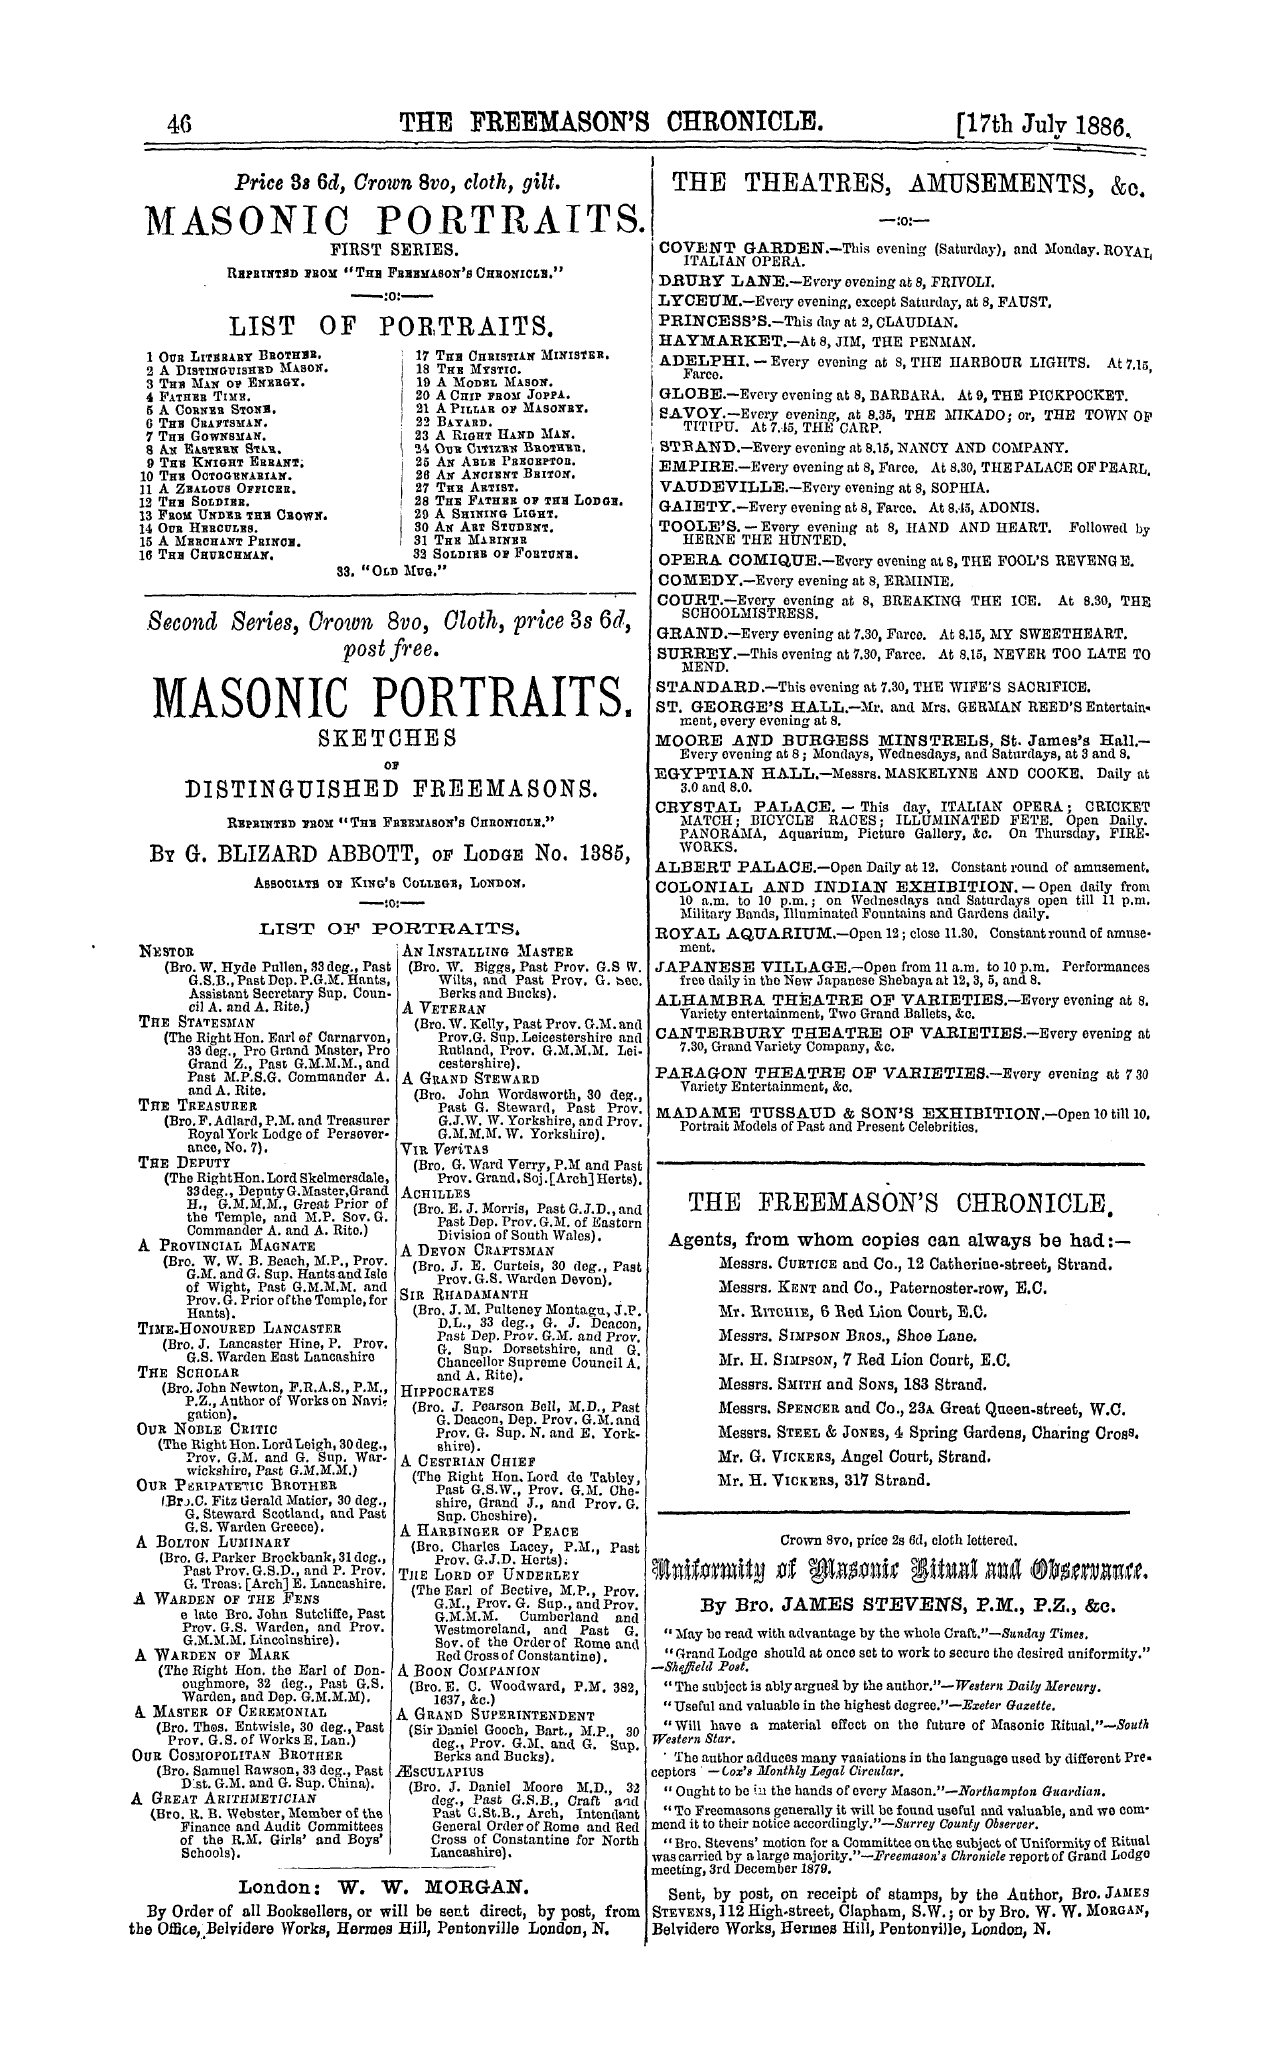 The Freemason's Chronicle: 1886-07-17 - Ad01403